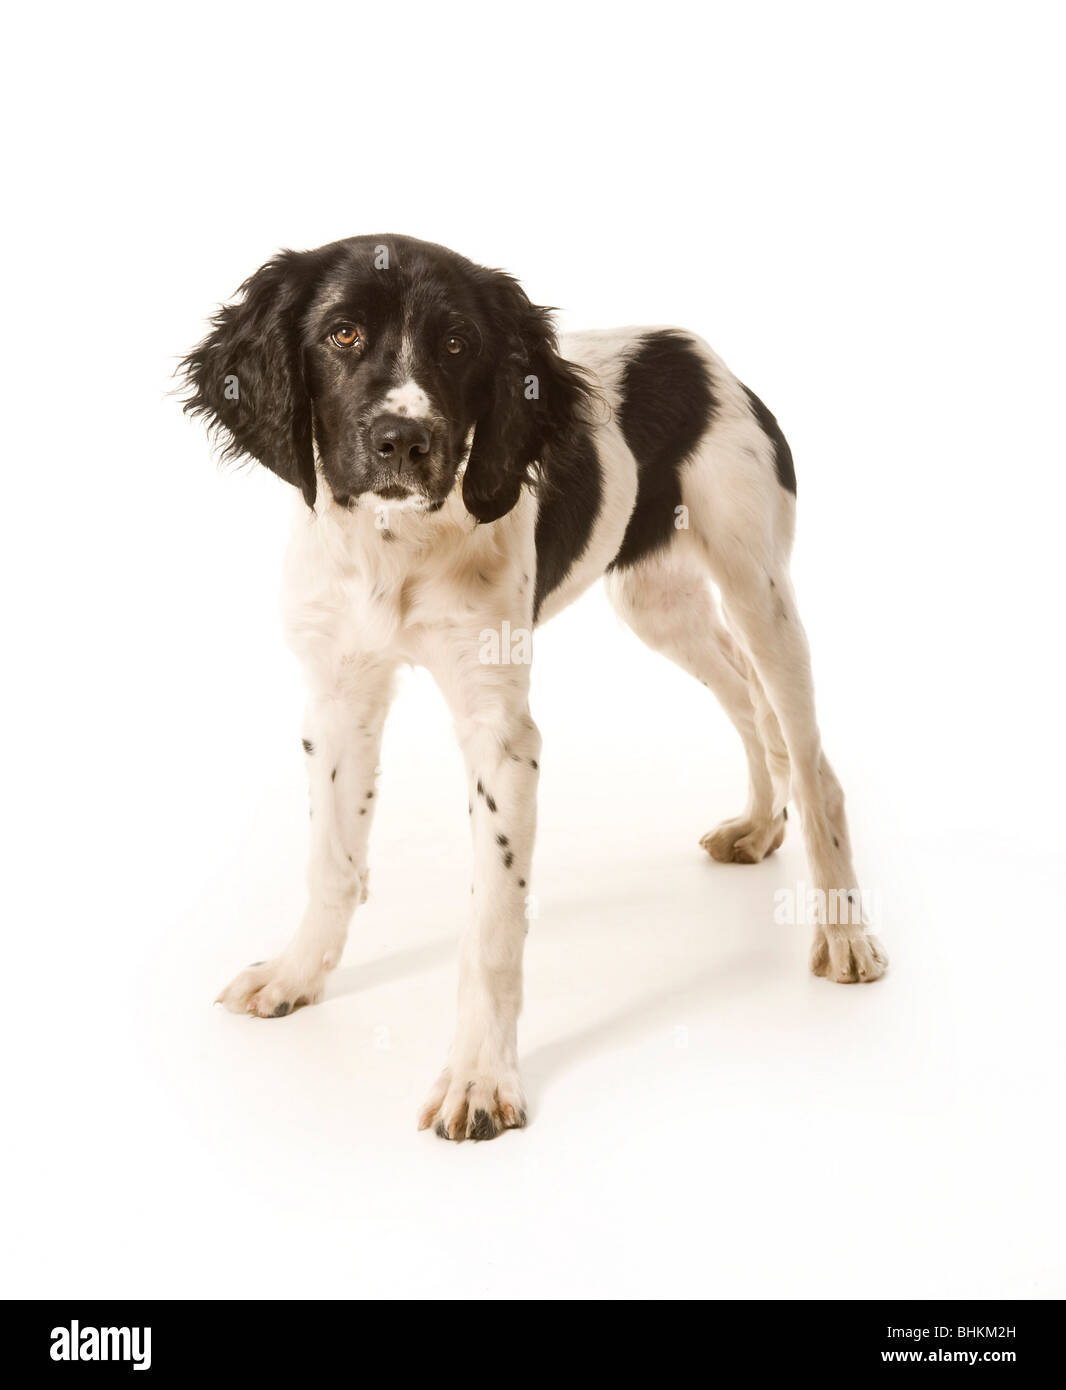 Giant Munsterlander puppy standing on white background Stock Photo